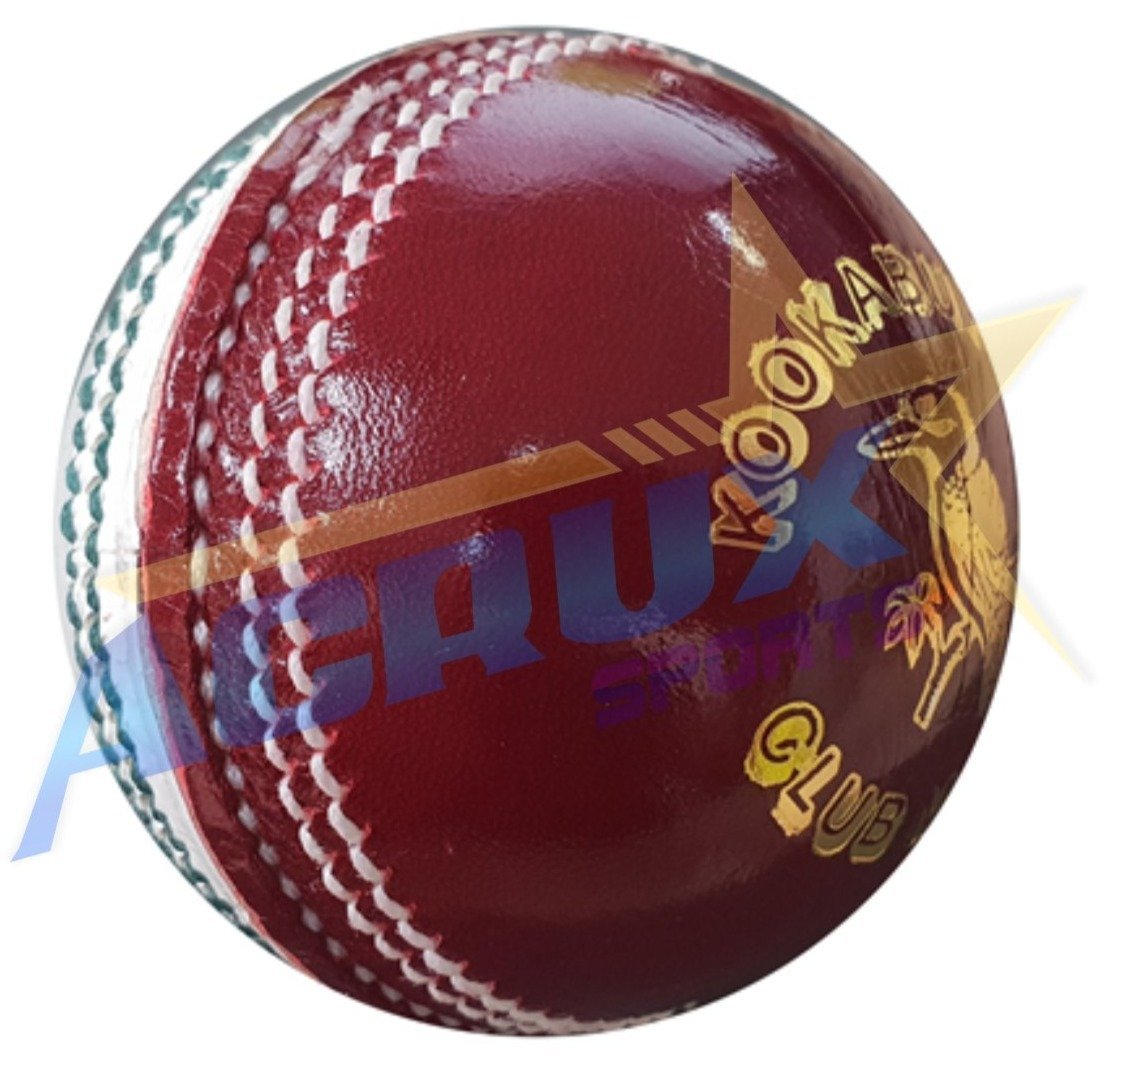 Kookaburra Club Match Cricket Ball Pack of 12.